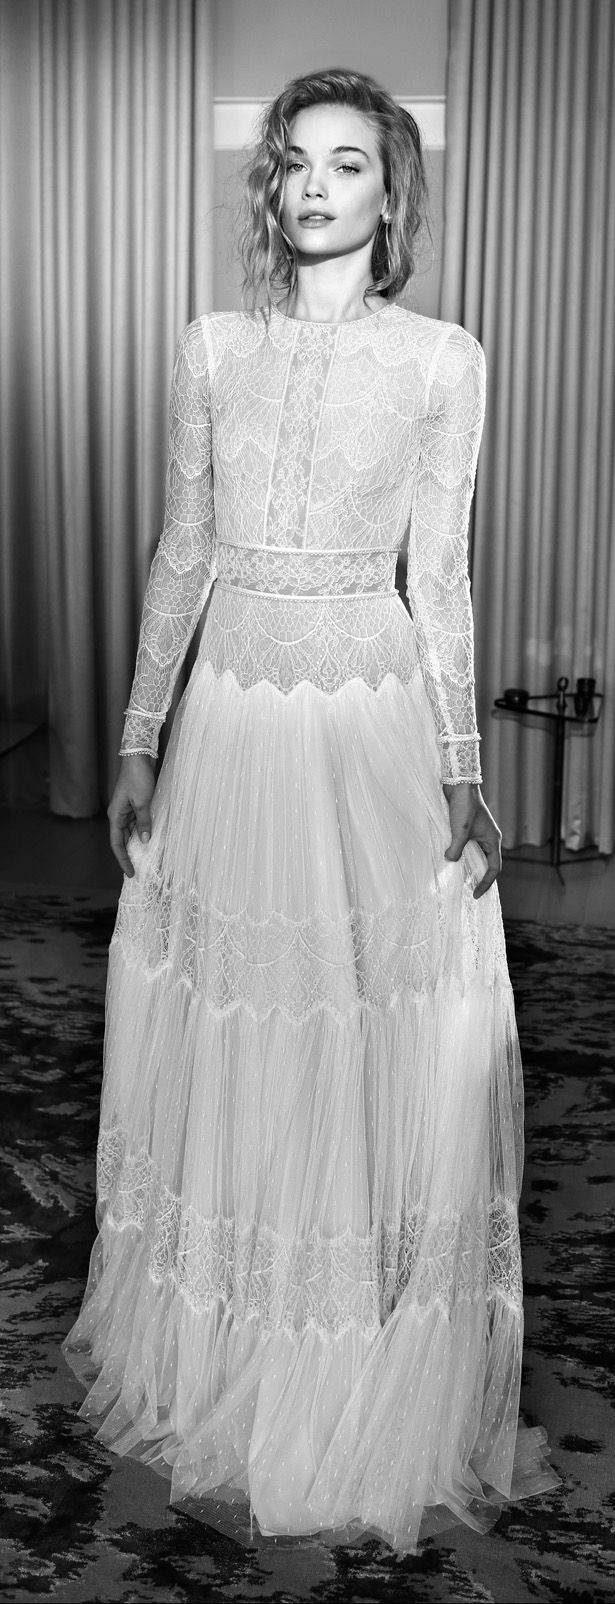 Glitzy Gowns | Lihi Hod 2015 Wedding Dress | She's Intentional